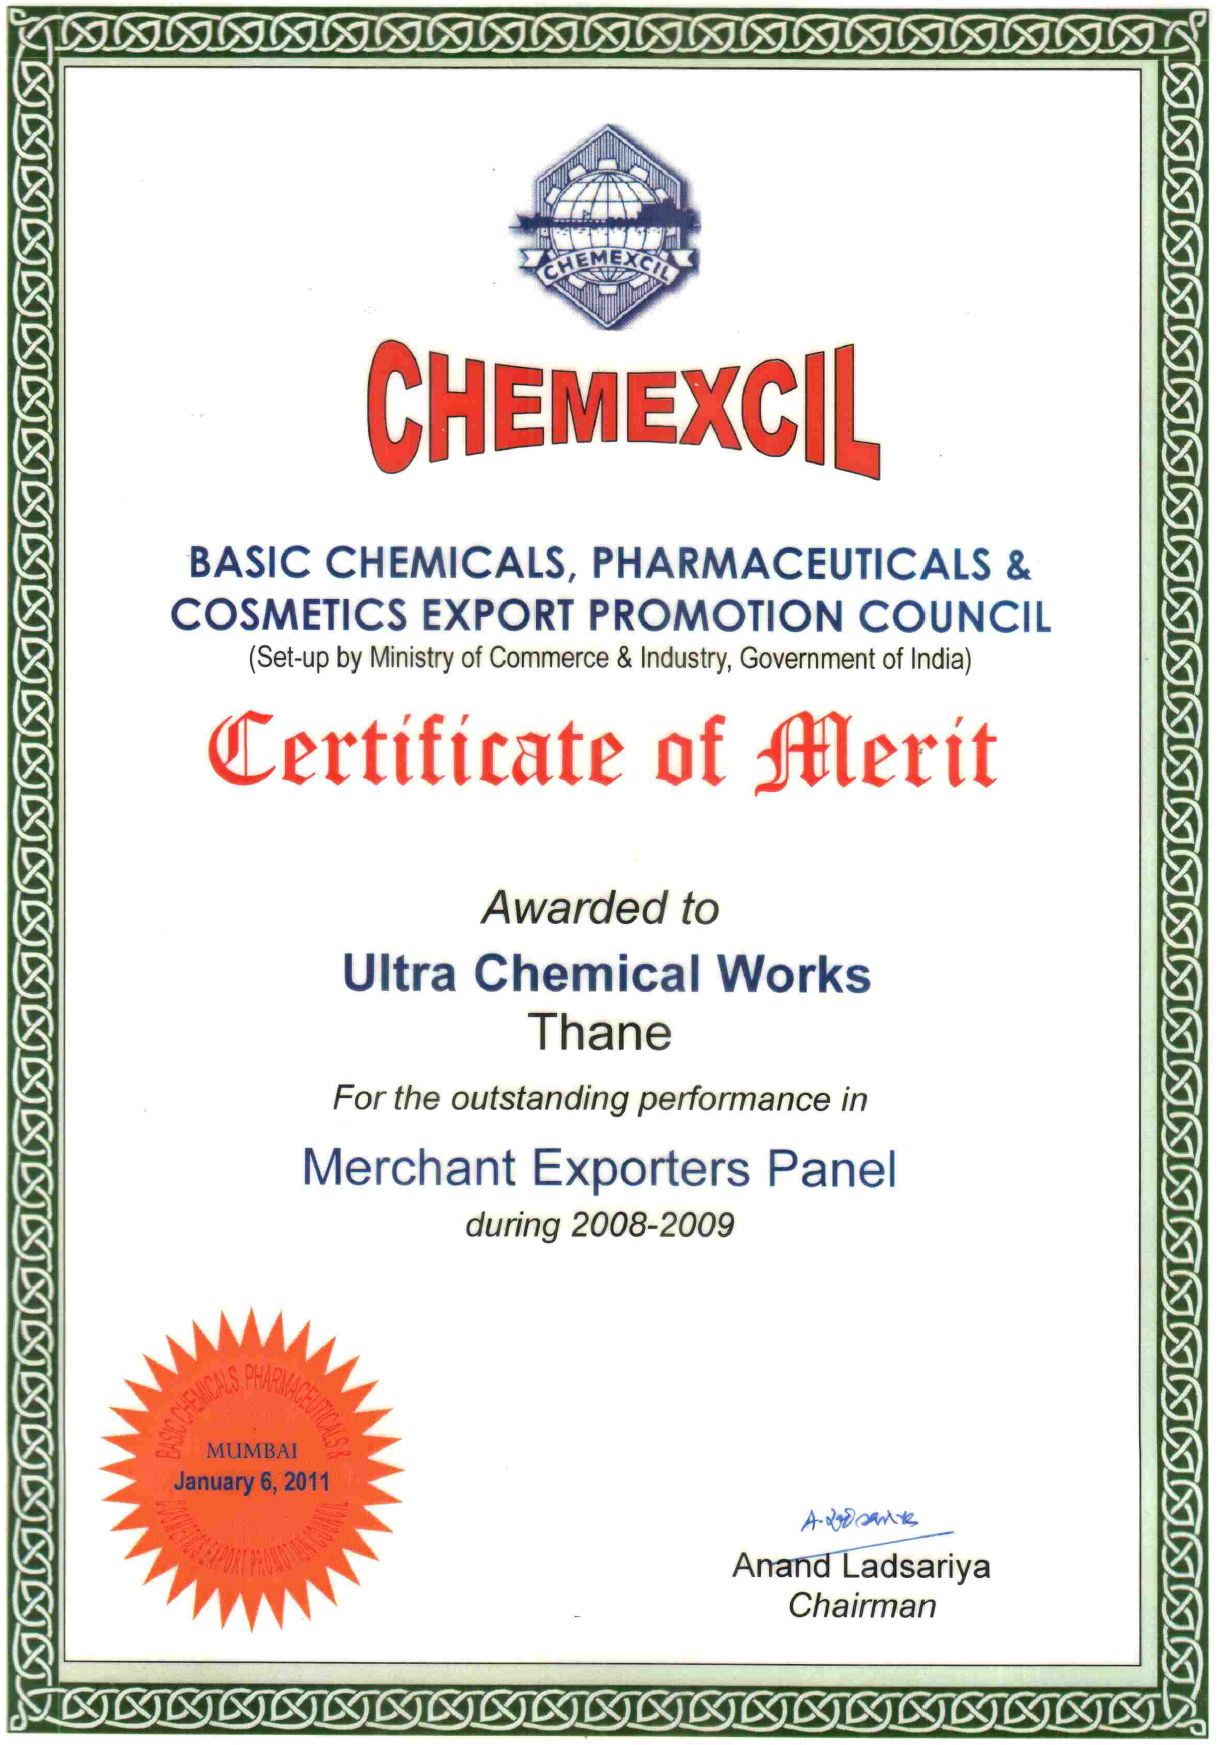 Chemexcil Award for 2008-2009